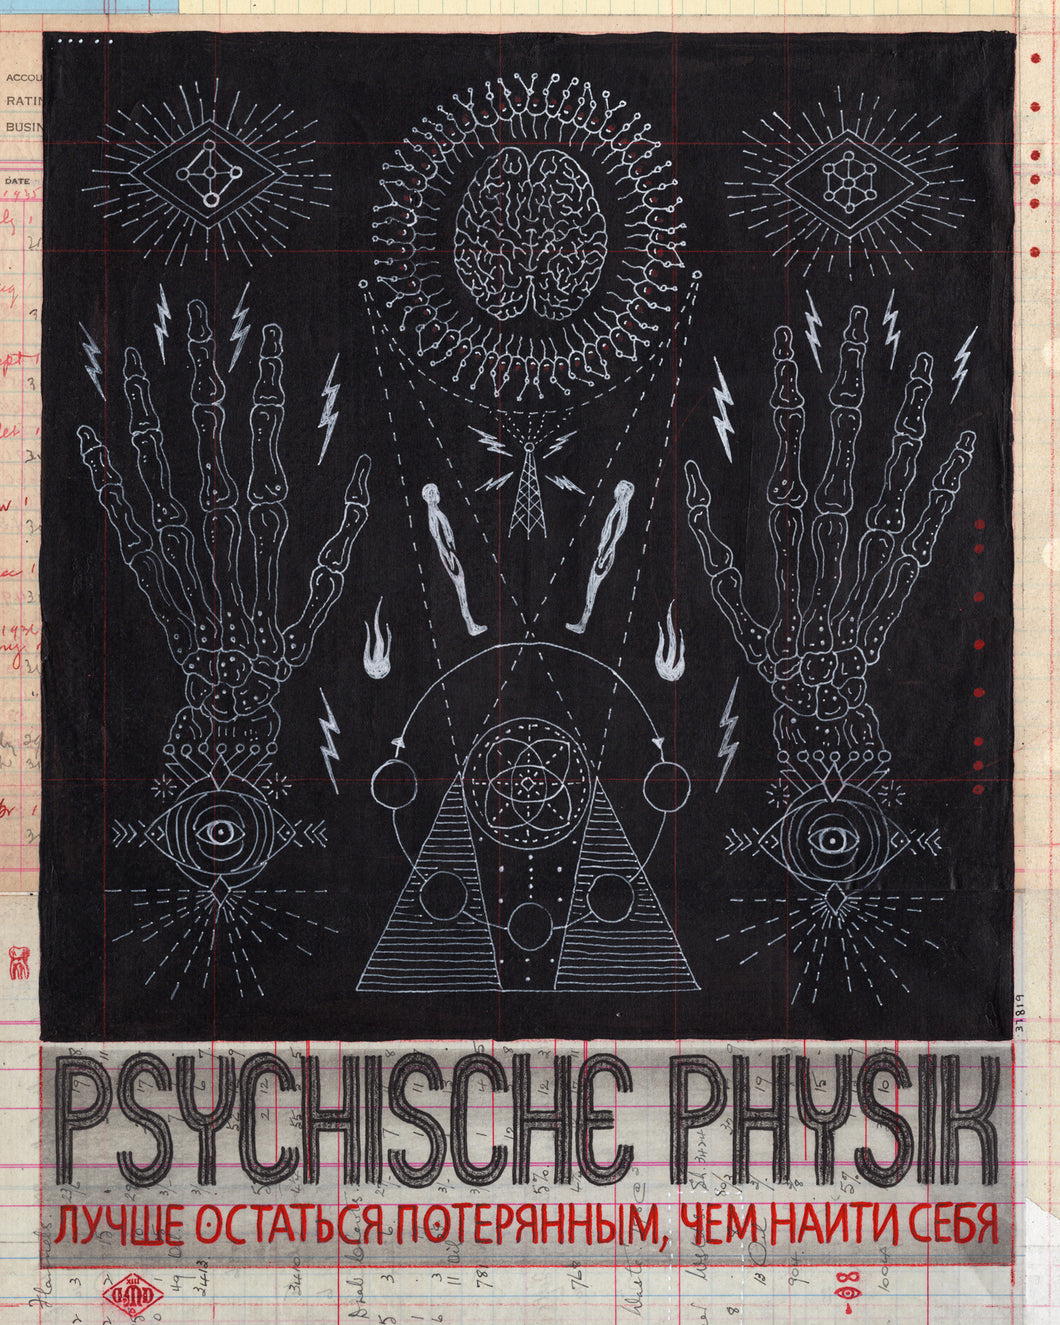 Psychische Physik, Archival Print